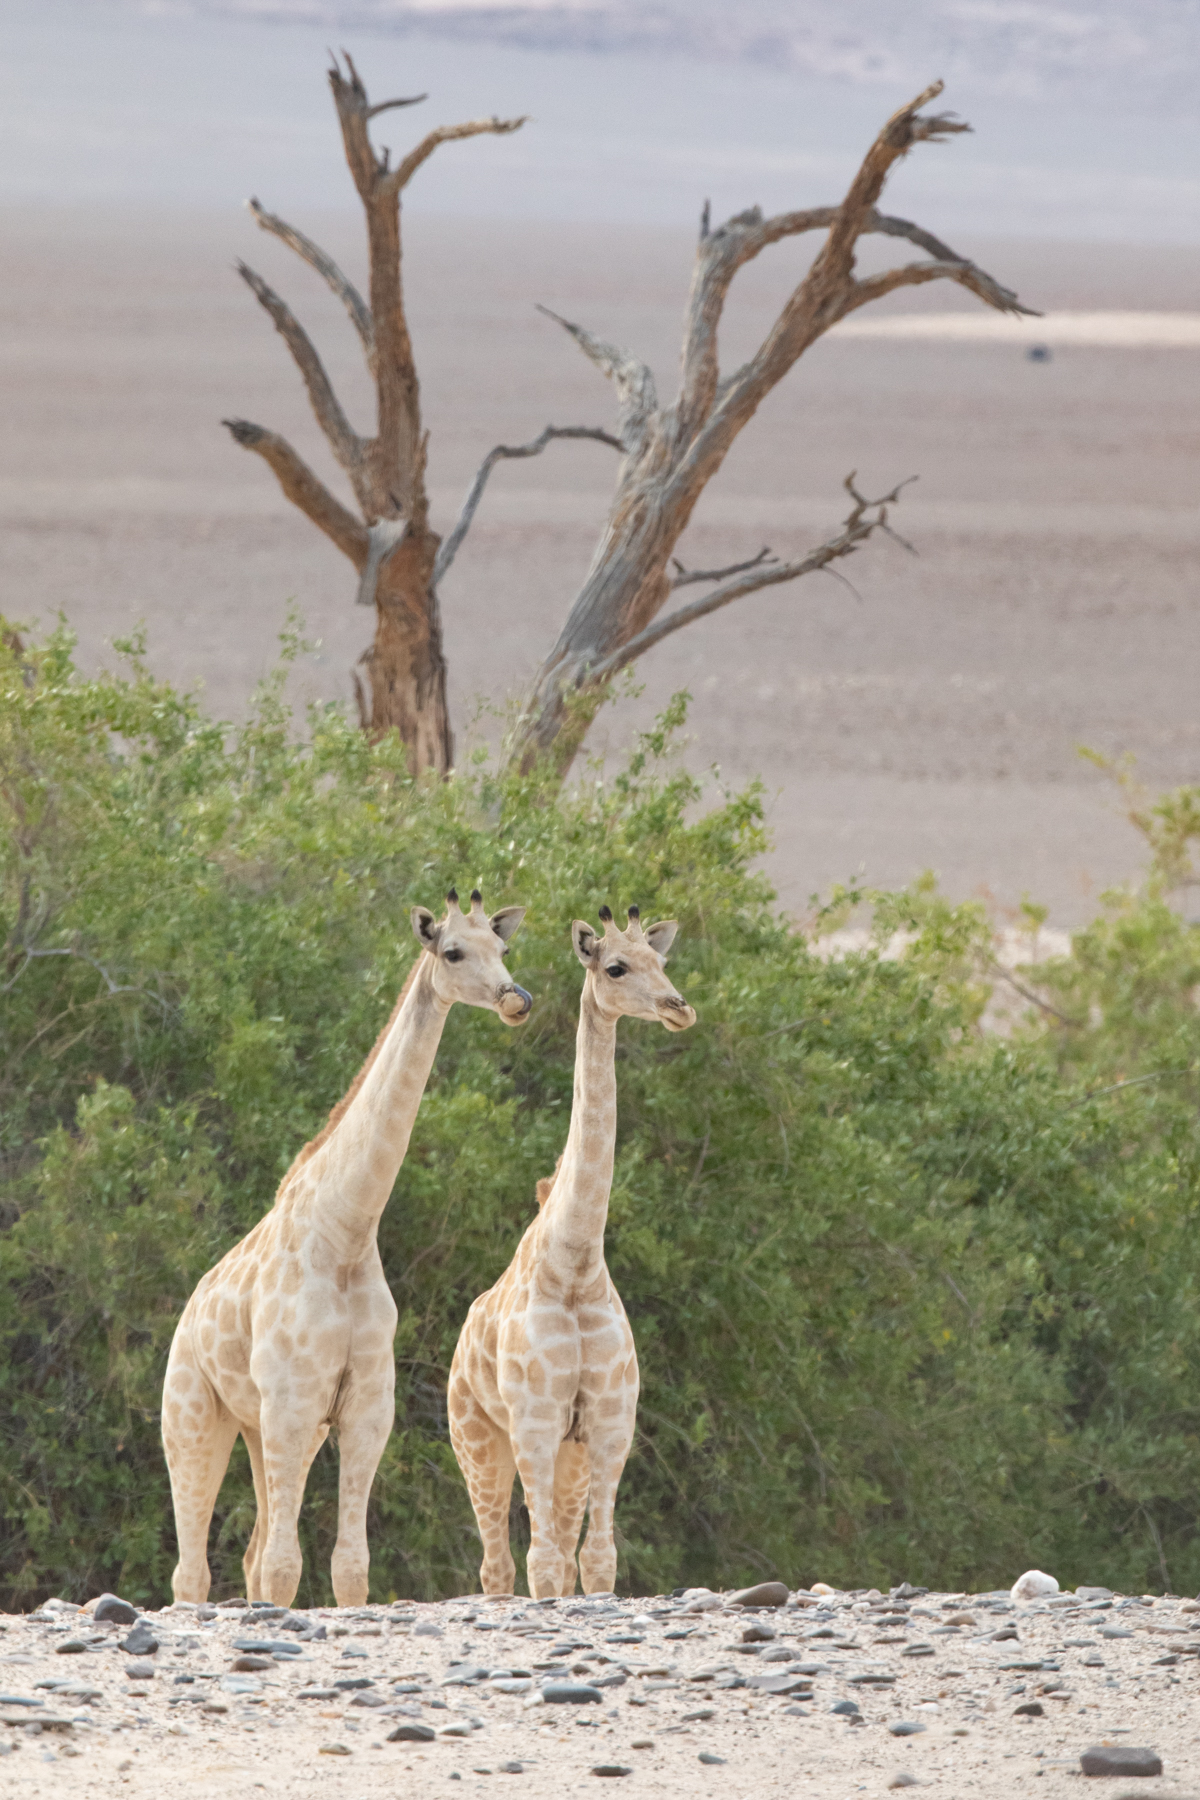 Giraffes imitating trees in the Hoarasib ephemeral river